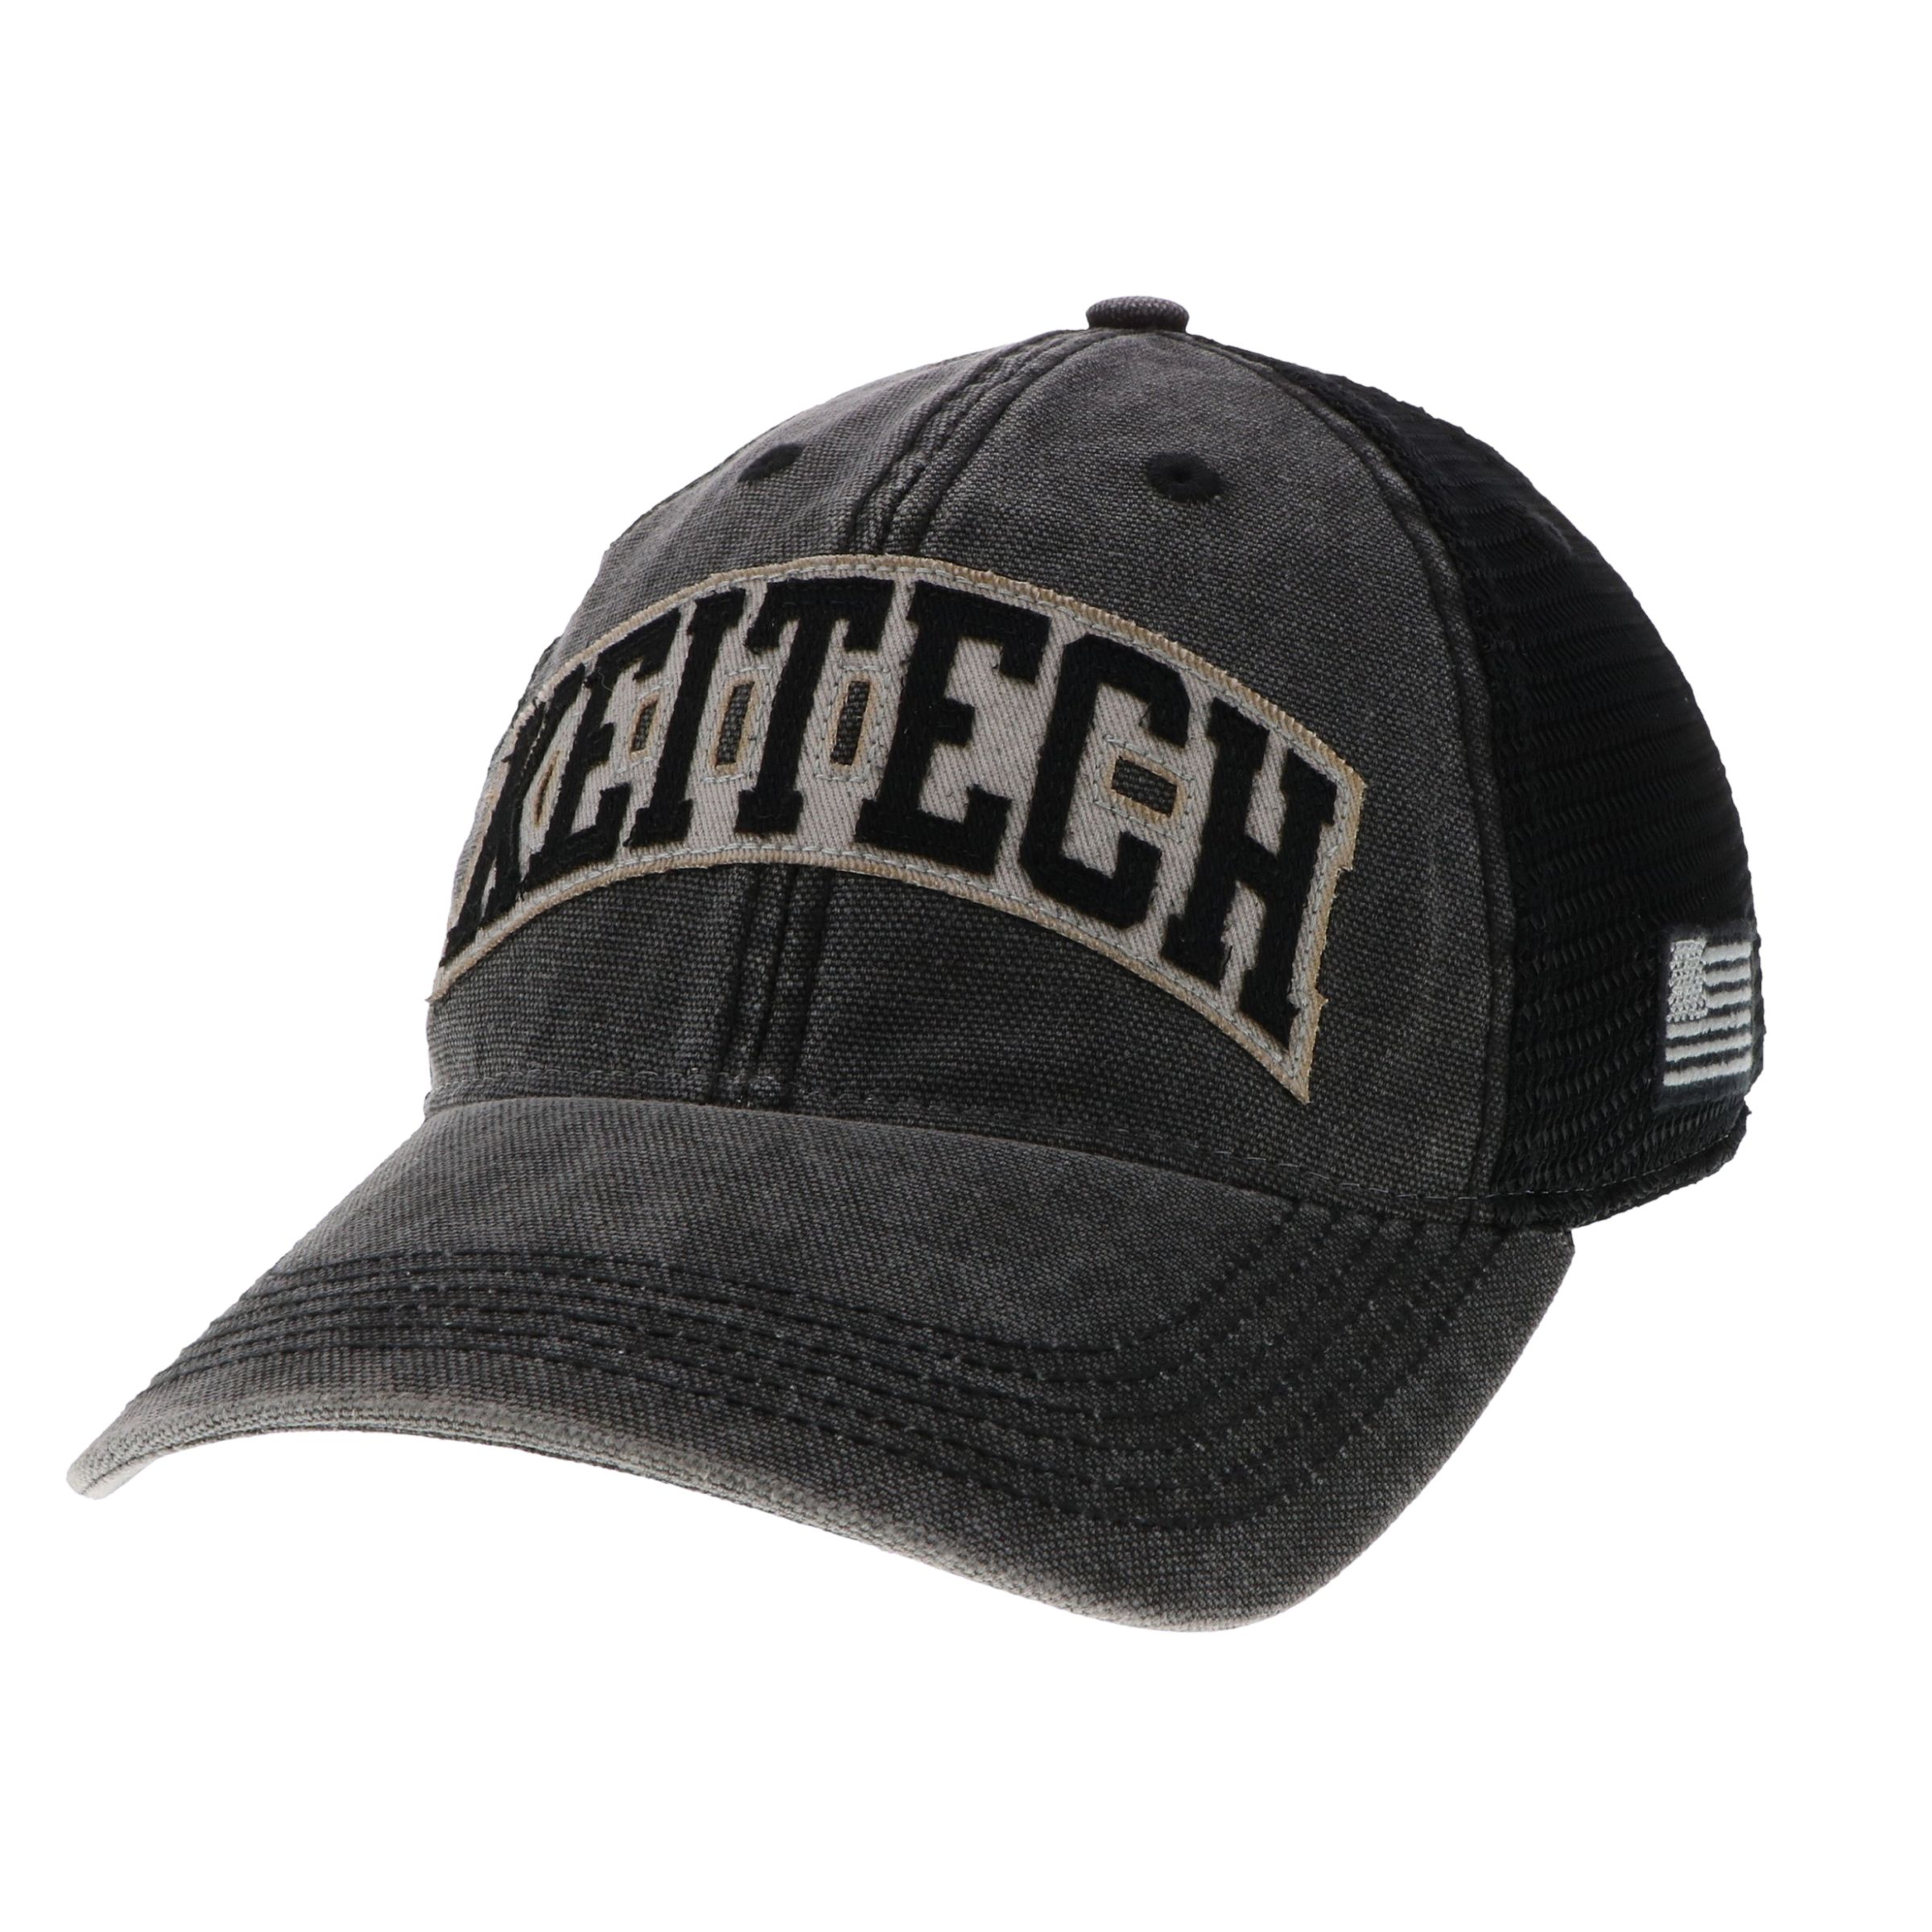 Keitech Cap - Camo/Black